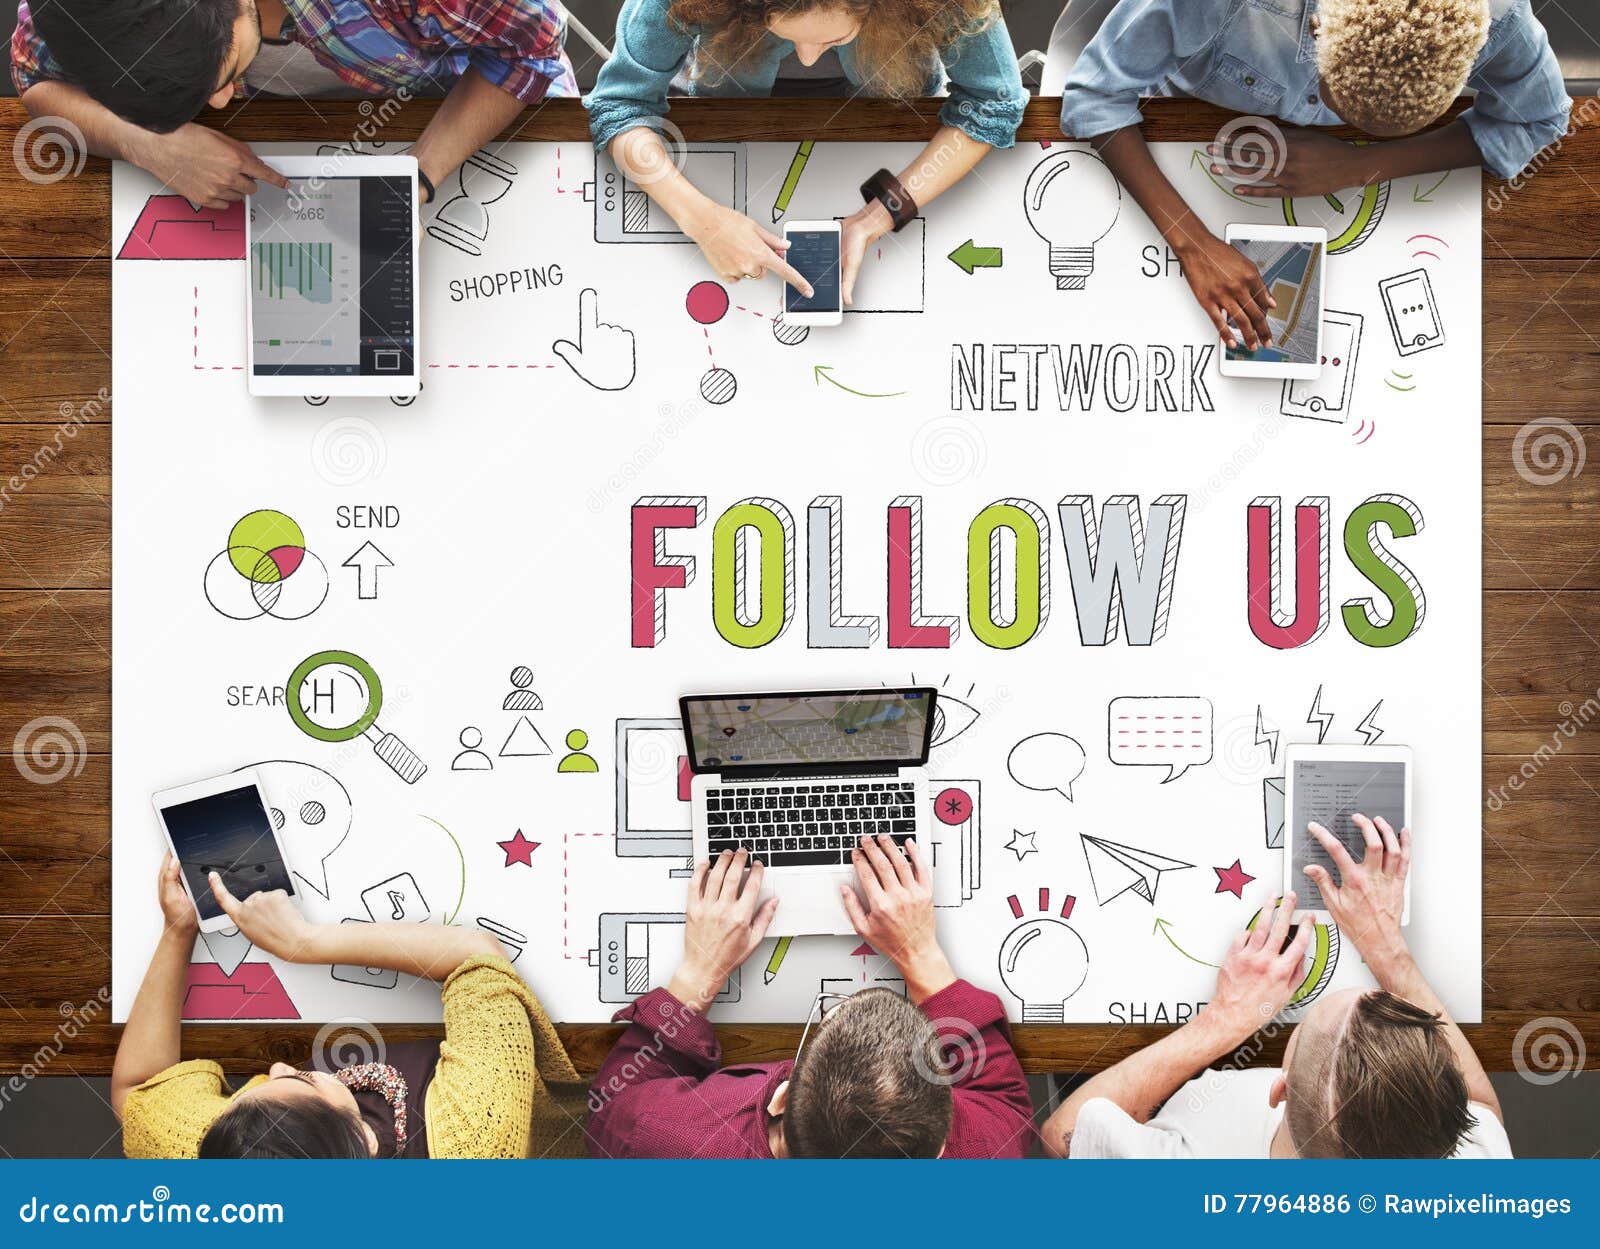 follow us social network connect social media concept